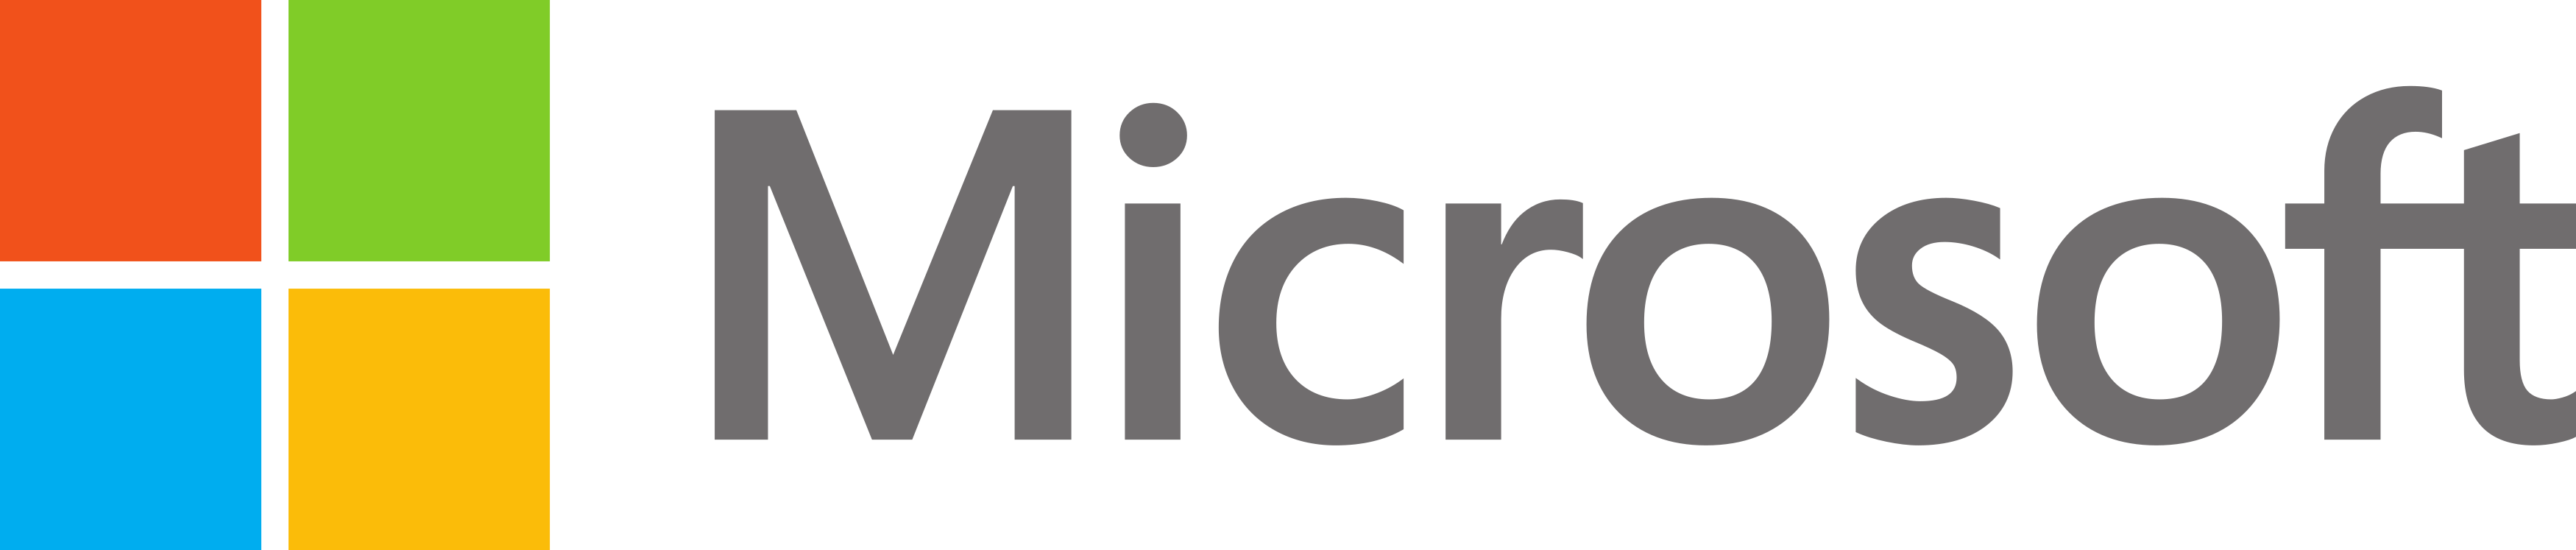 microsoft logo - Microsoft Logo